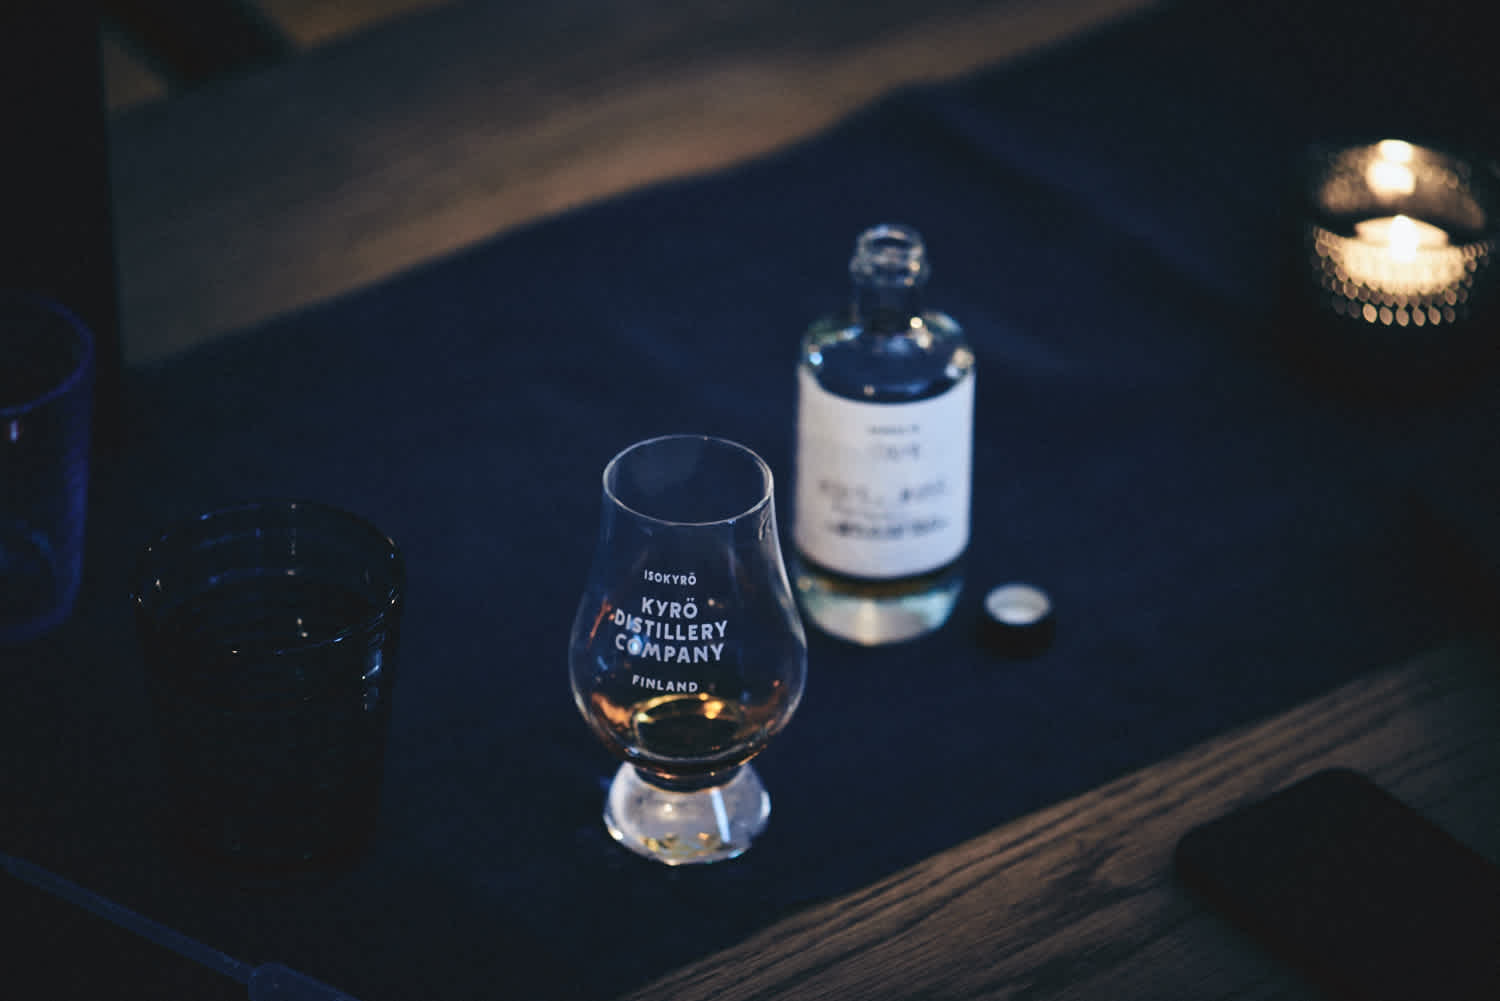 Whisky sample and Kyrö Distillery tasting glass